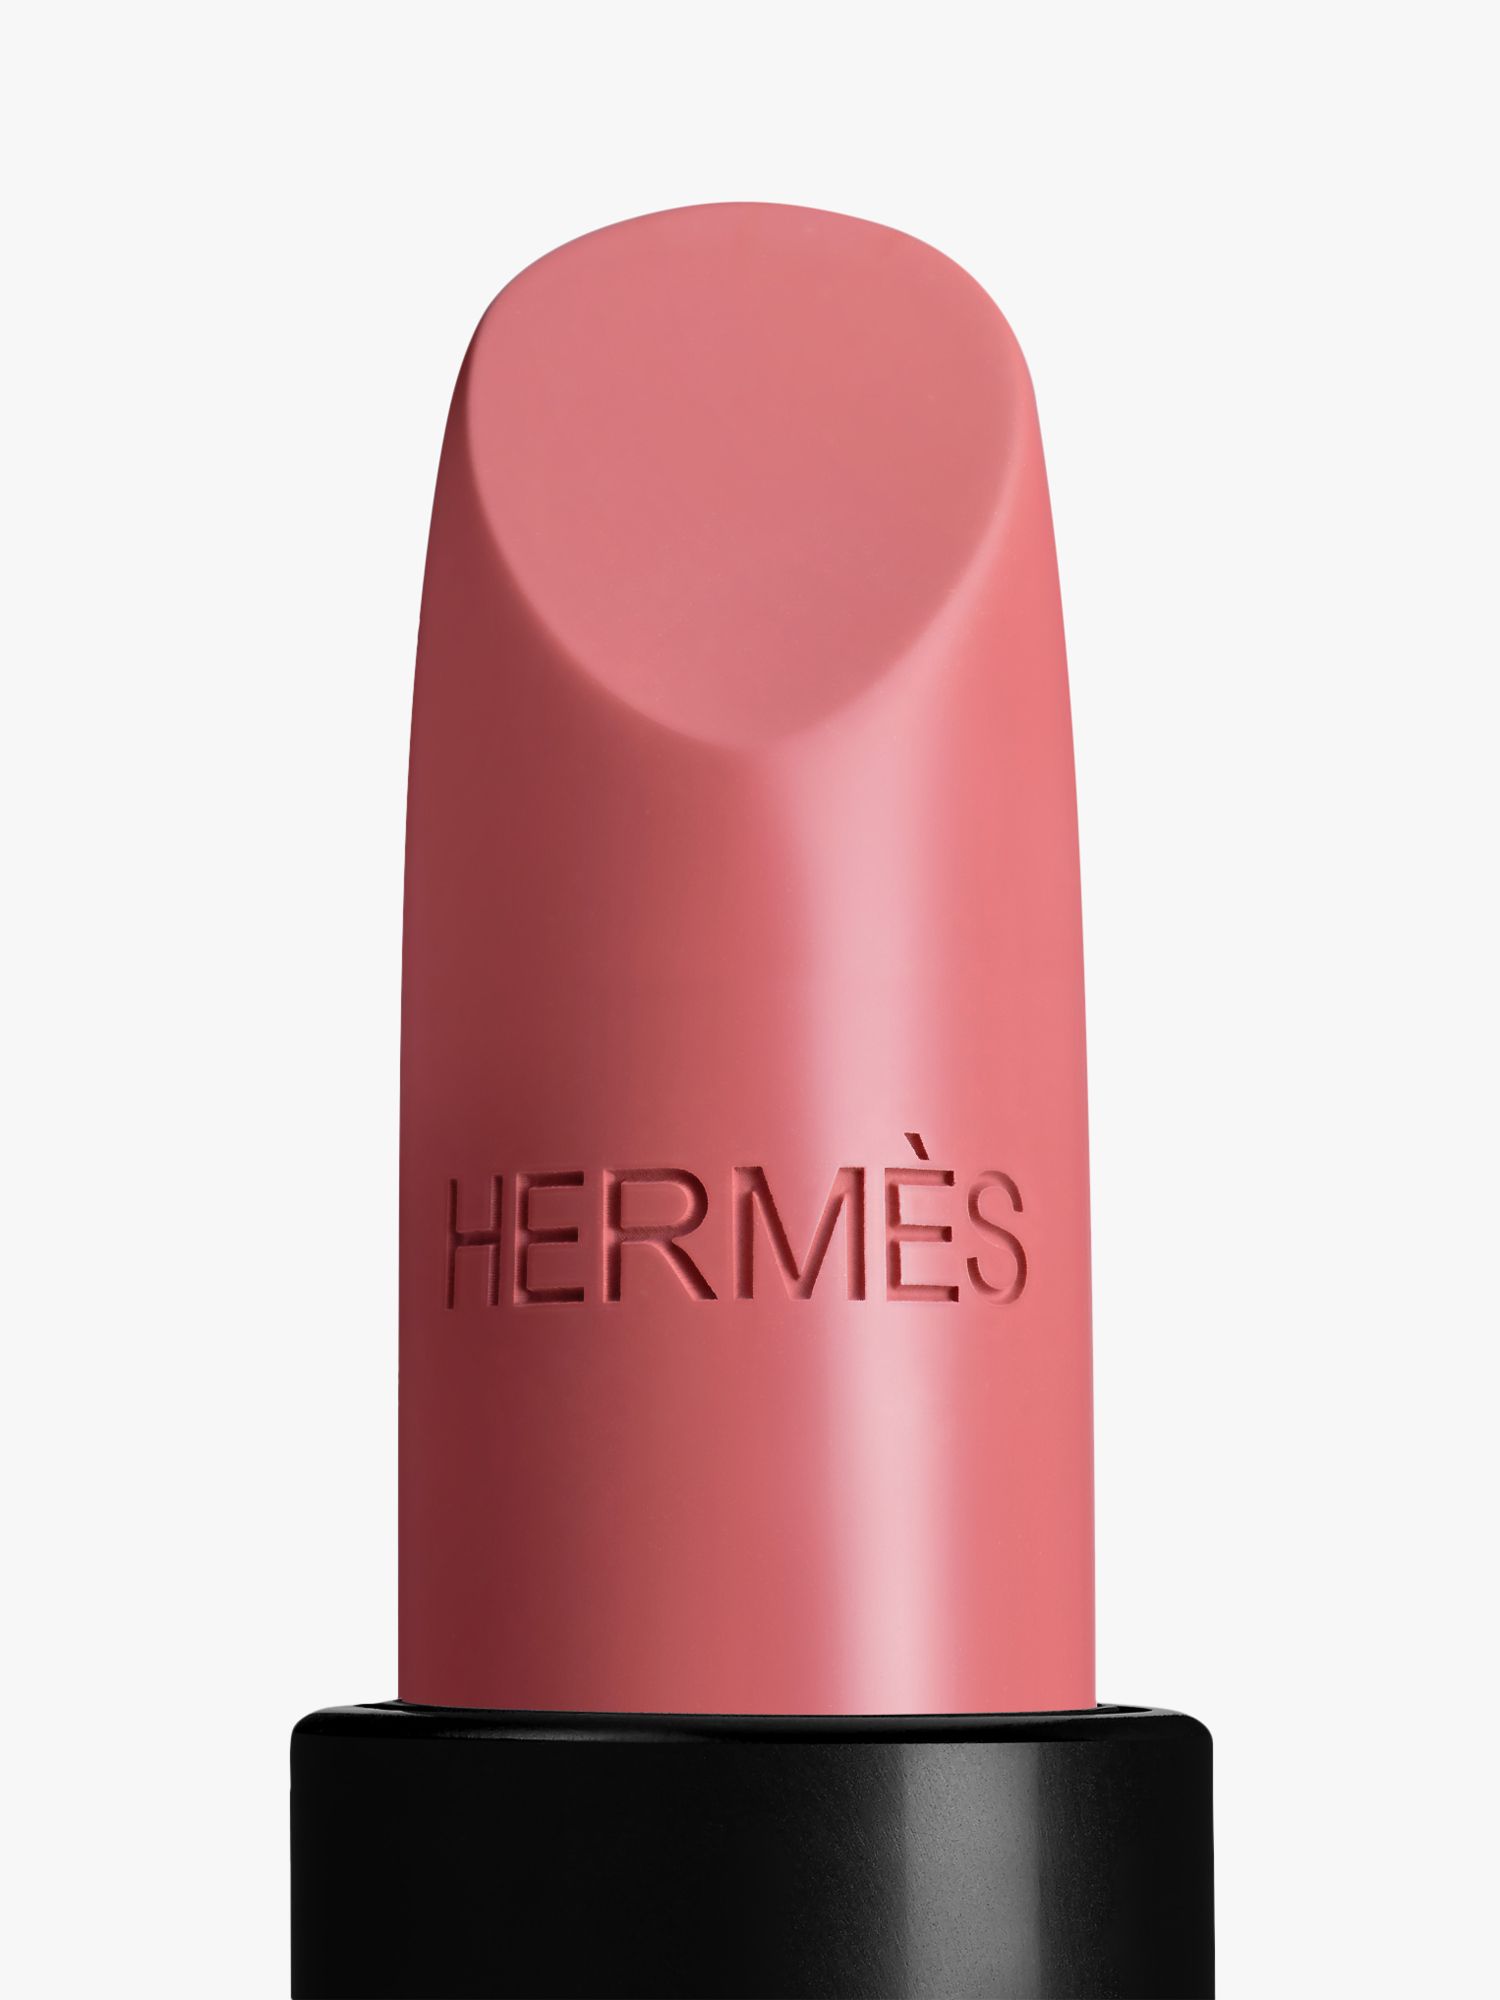 Hermès Rouge Hermès Satin Lipstick Refill, 18 Rose Encens 2